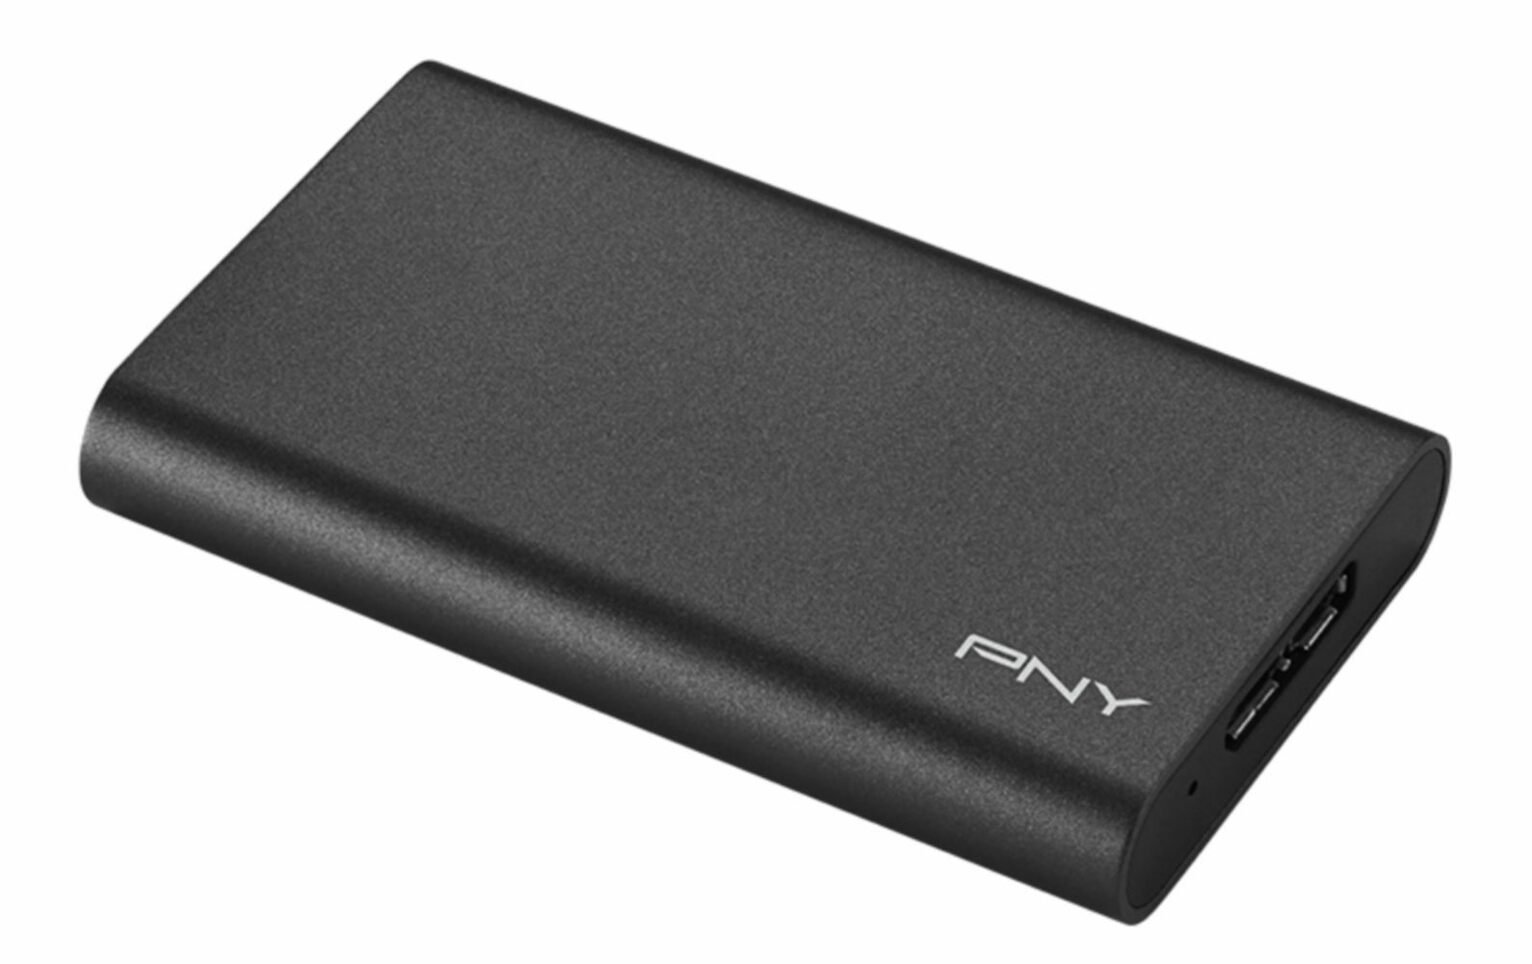 PNY Elite USB 3.1 Gen 1 960GB Portable SSD Hard Drive Review